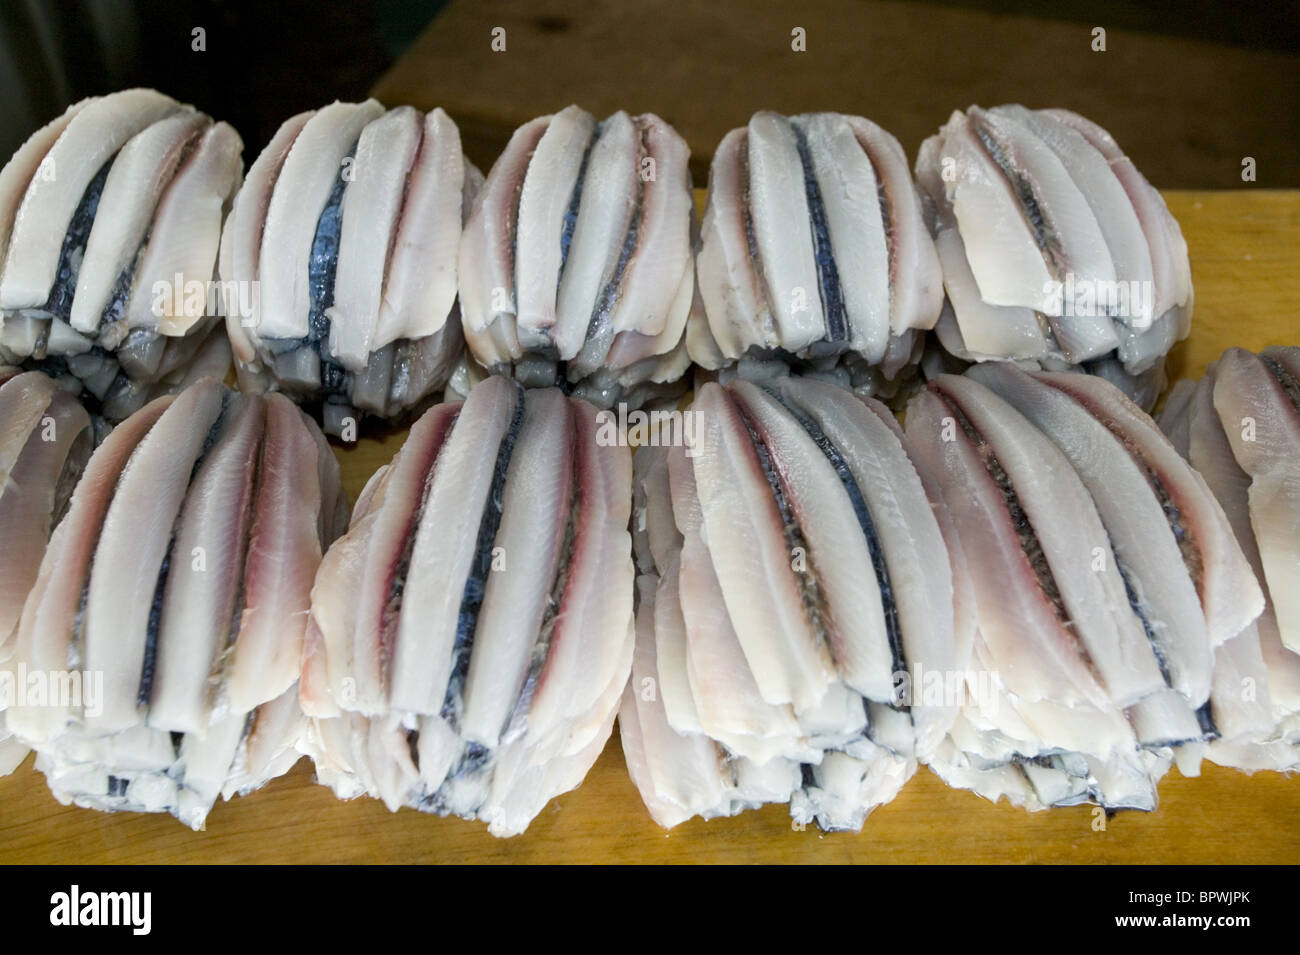 https://c8.alamy.com/comp/BPWJPK/filleted-flying-fish-at-oistins-fish-market-in-barbados-in-the-caribbean-BPWJPK.jpg